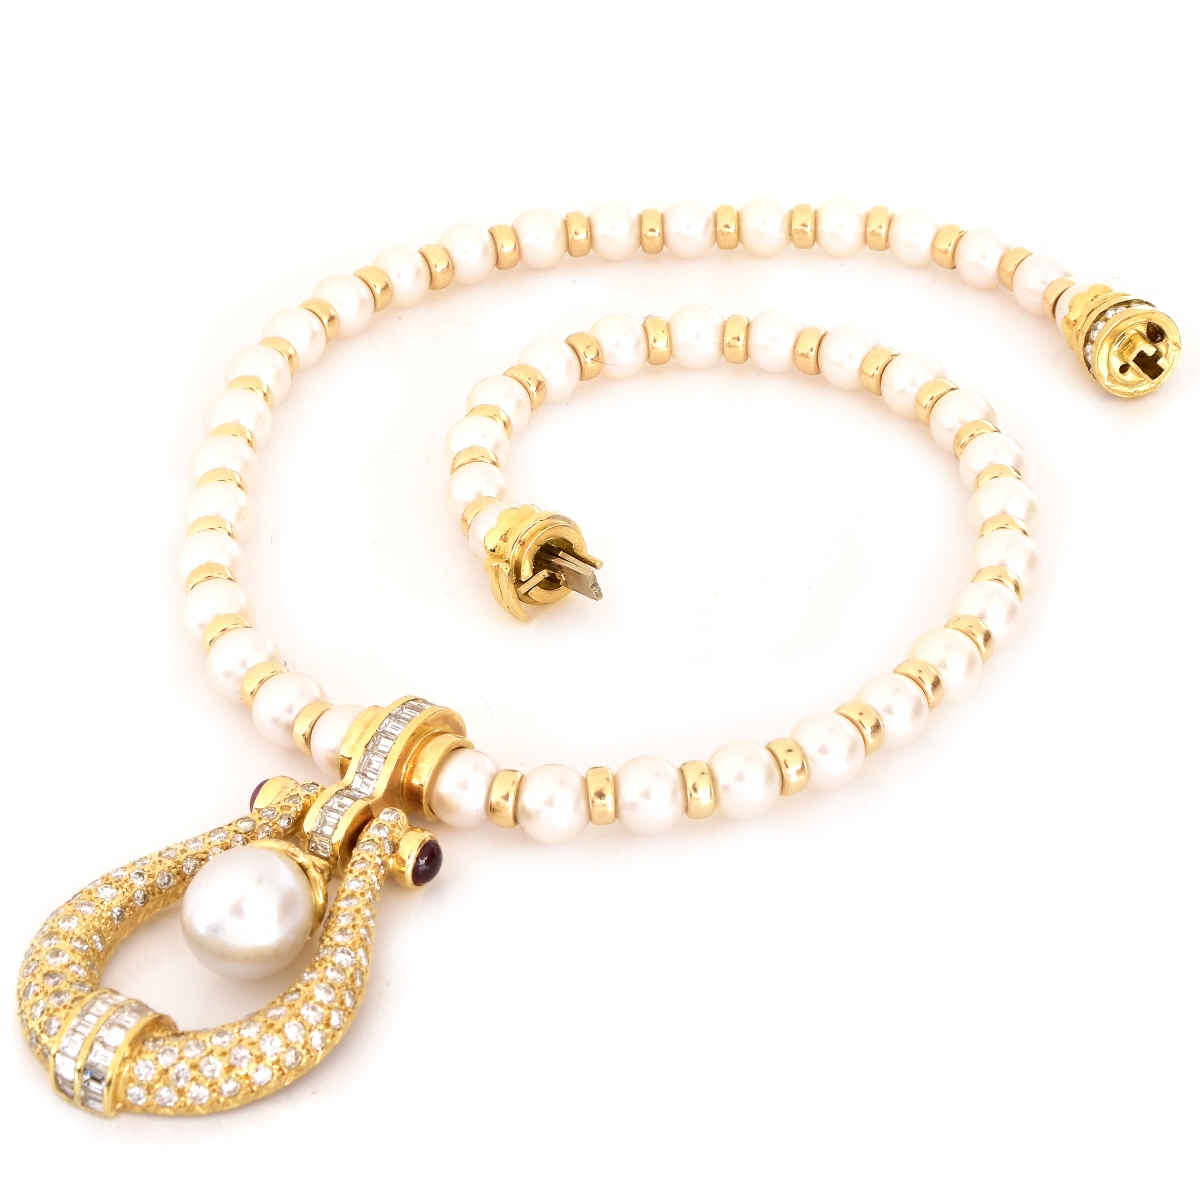 Bulgari style Diamond, Pearl and 18K Necklace